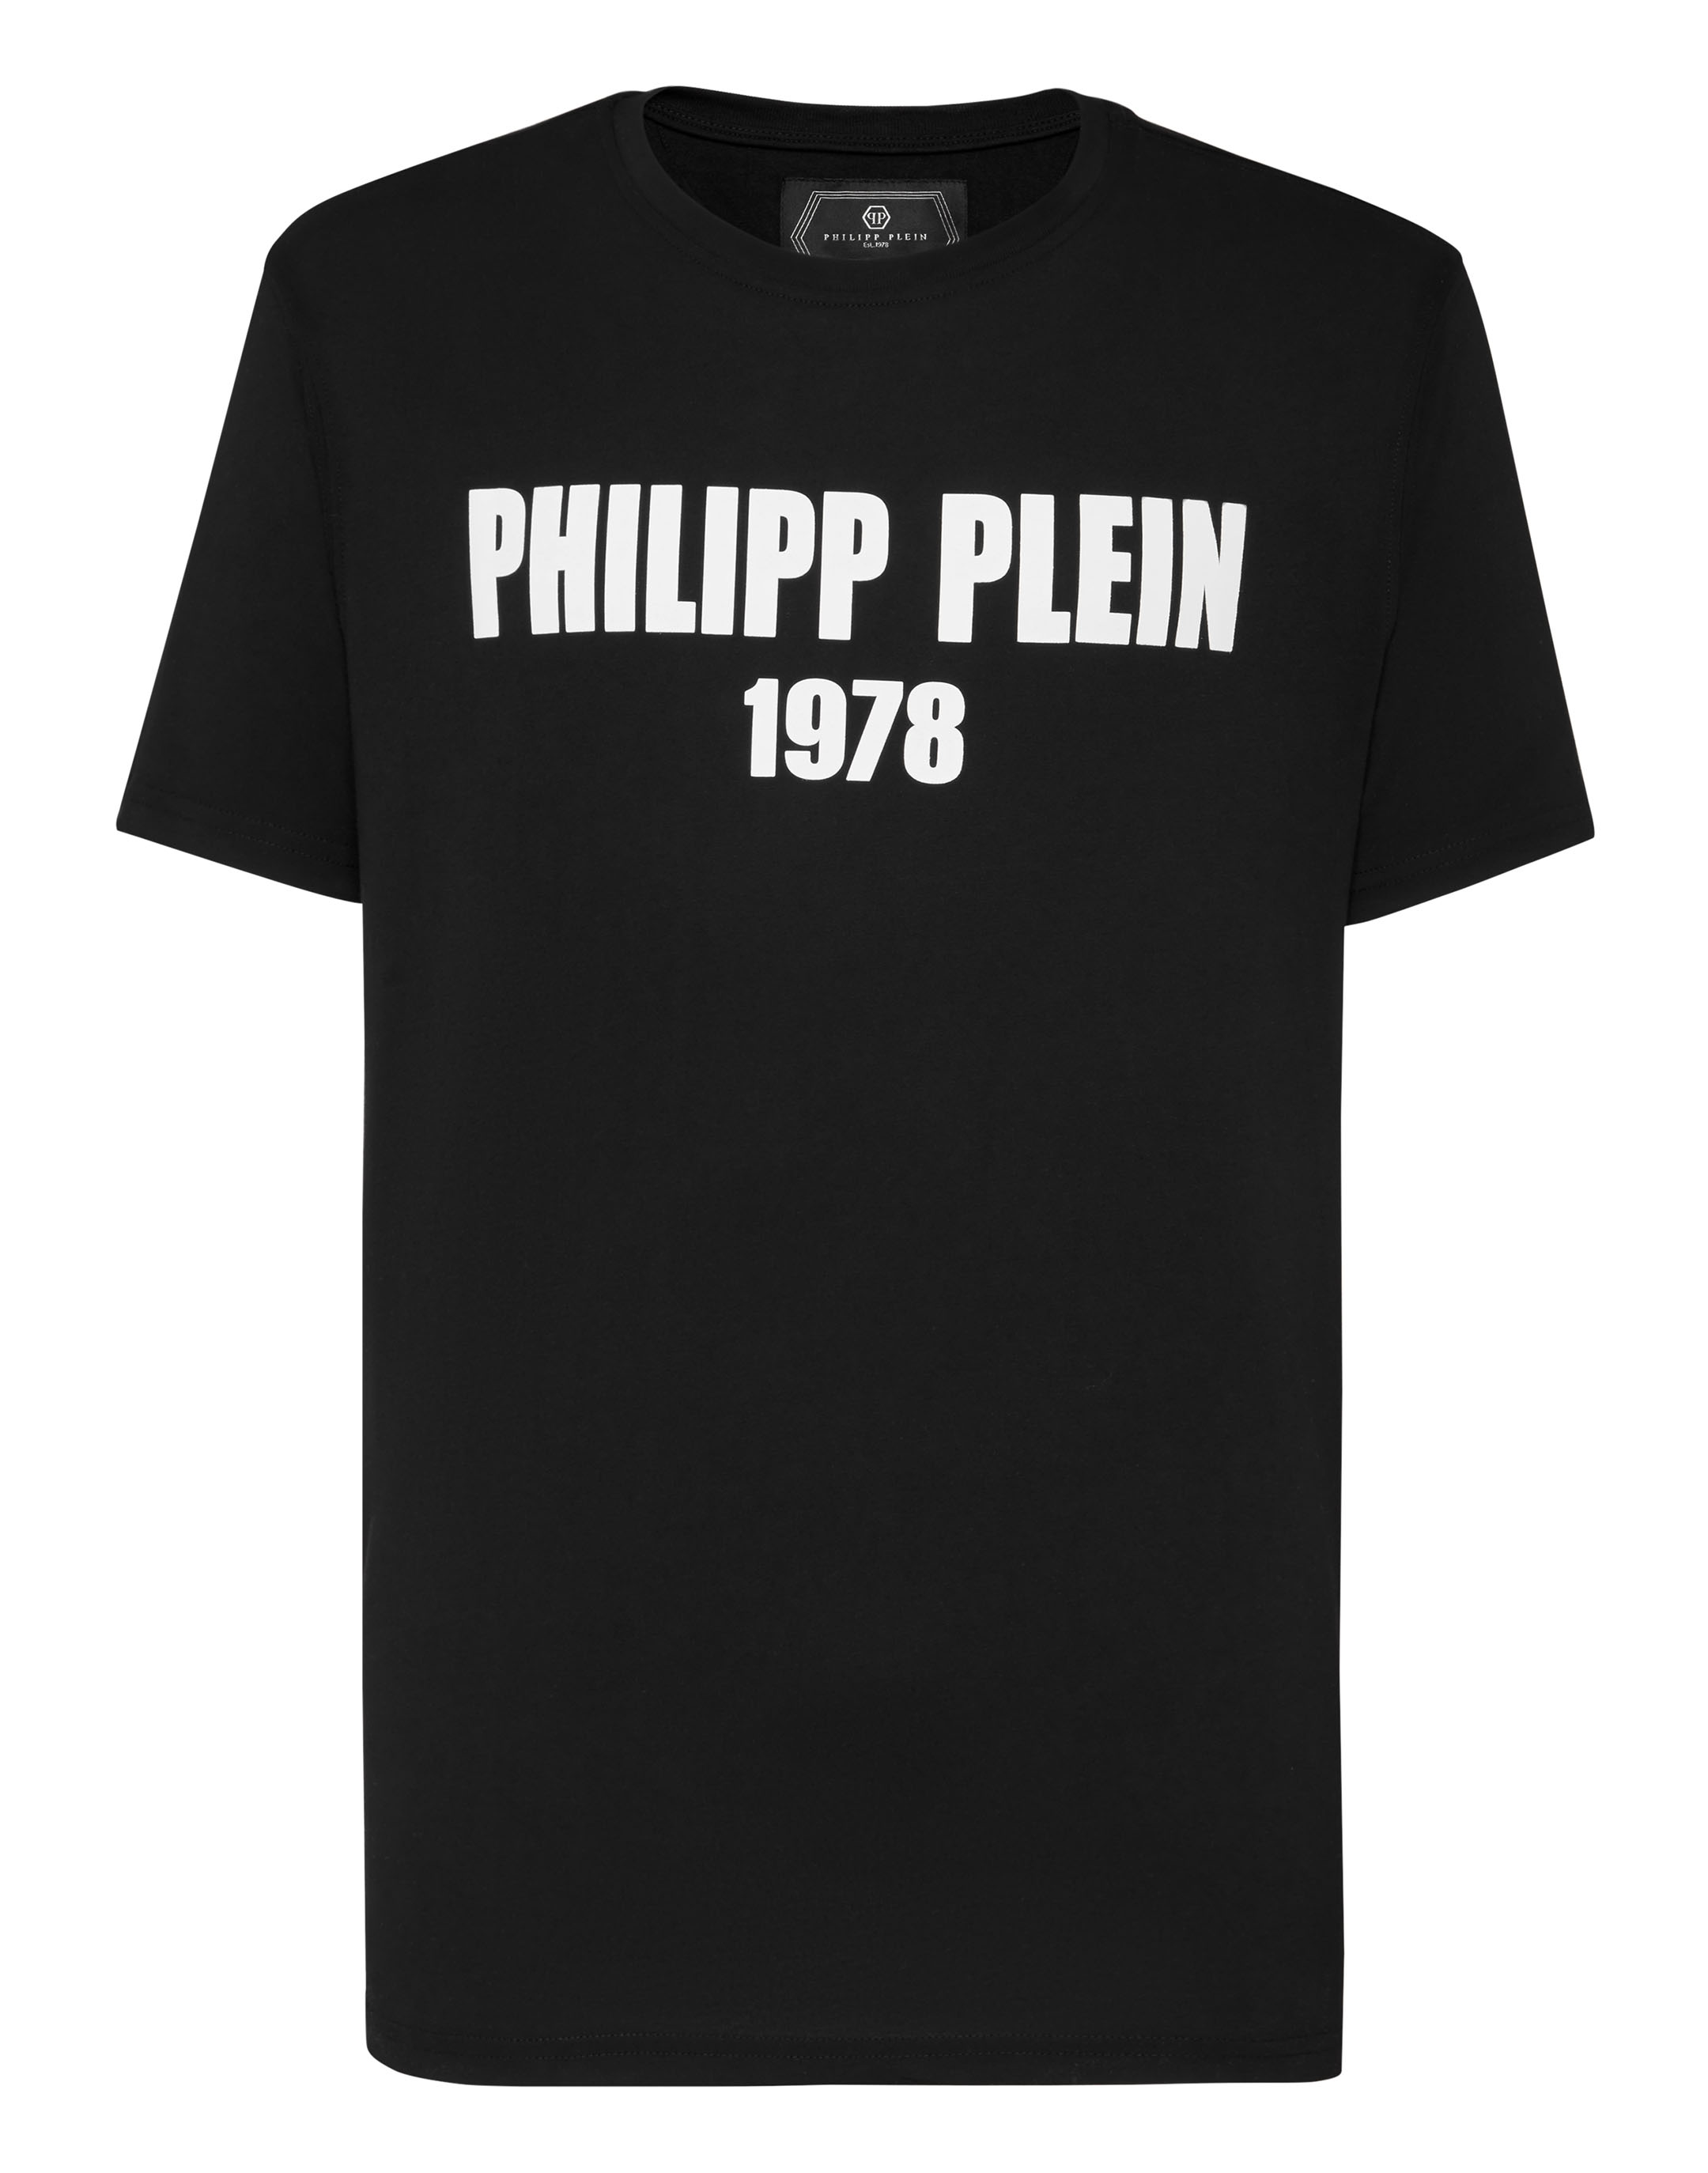 philipp plein black shirt